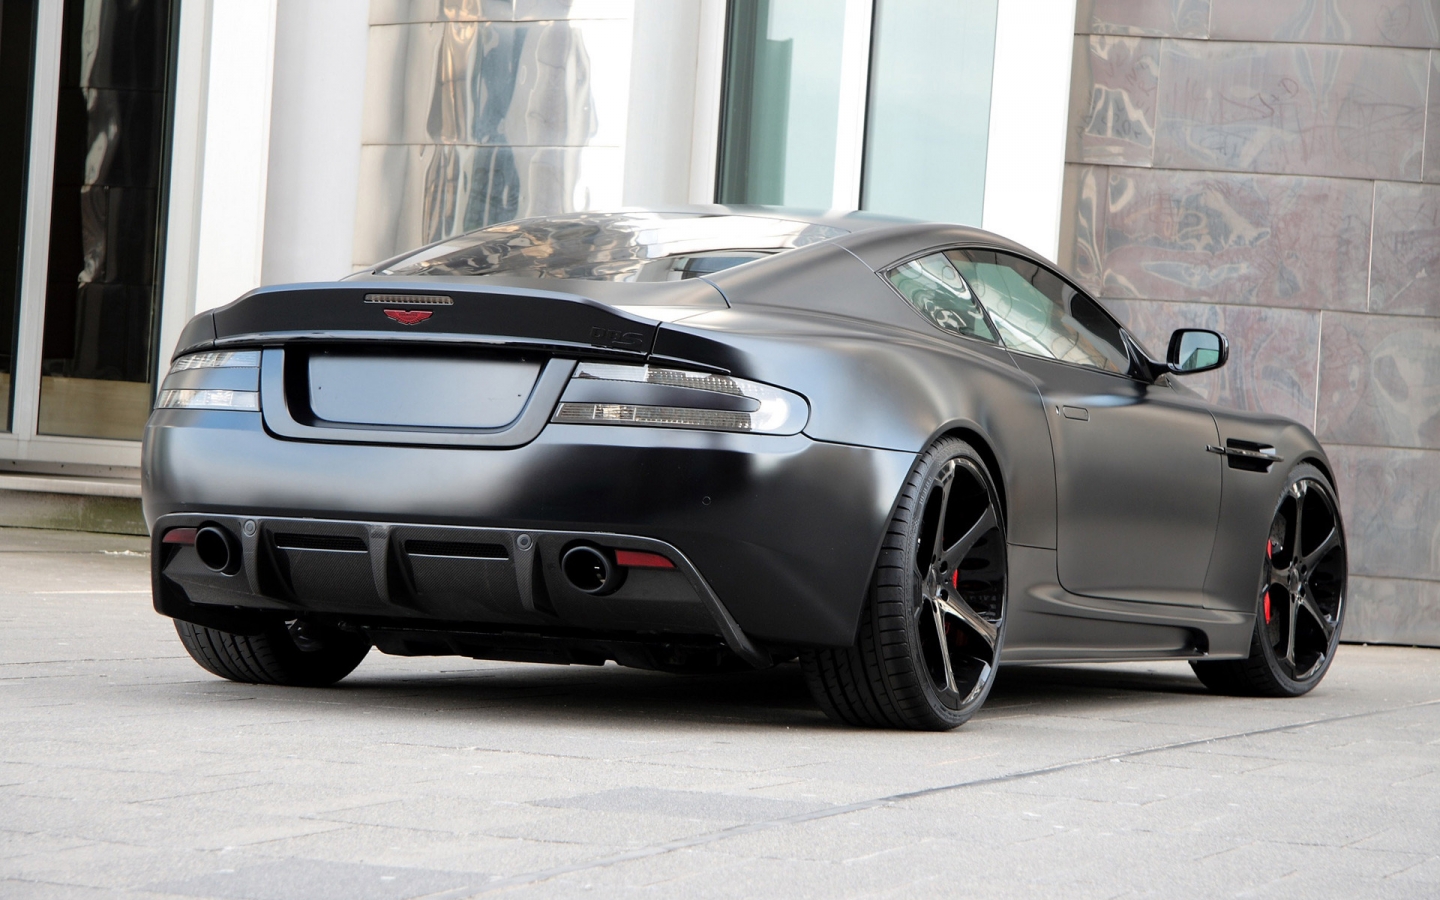 Aston Martin DBS Superior Black Edition Rear for 1440 x 900 widescreen resolution